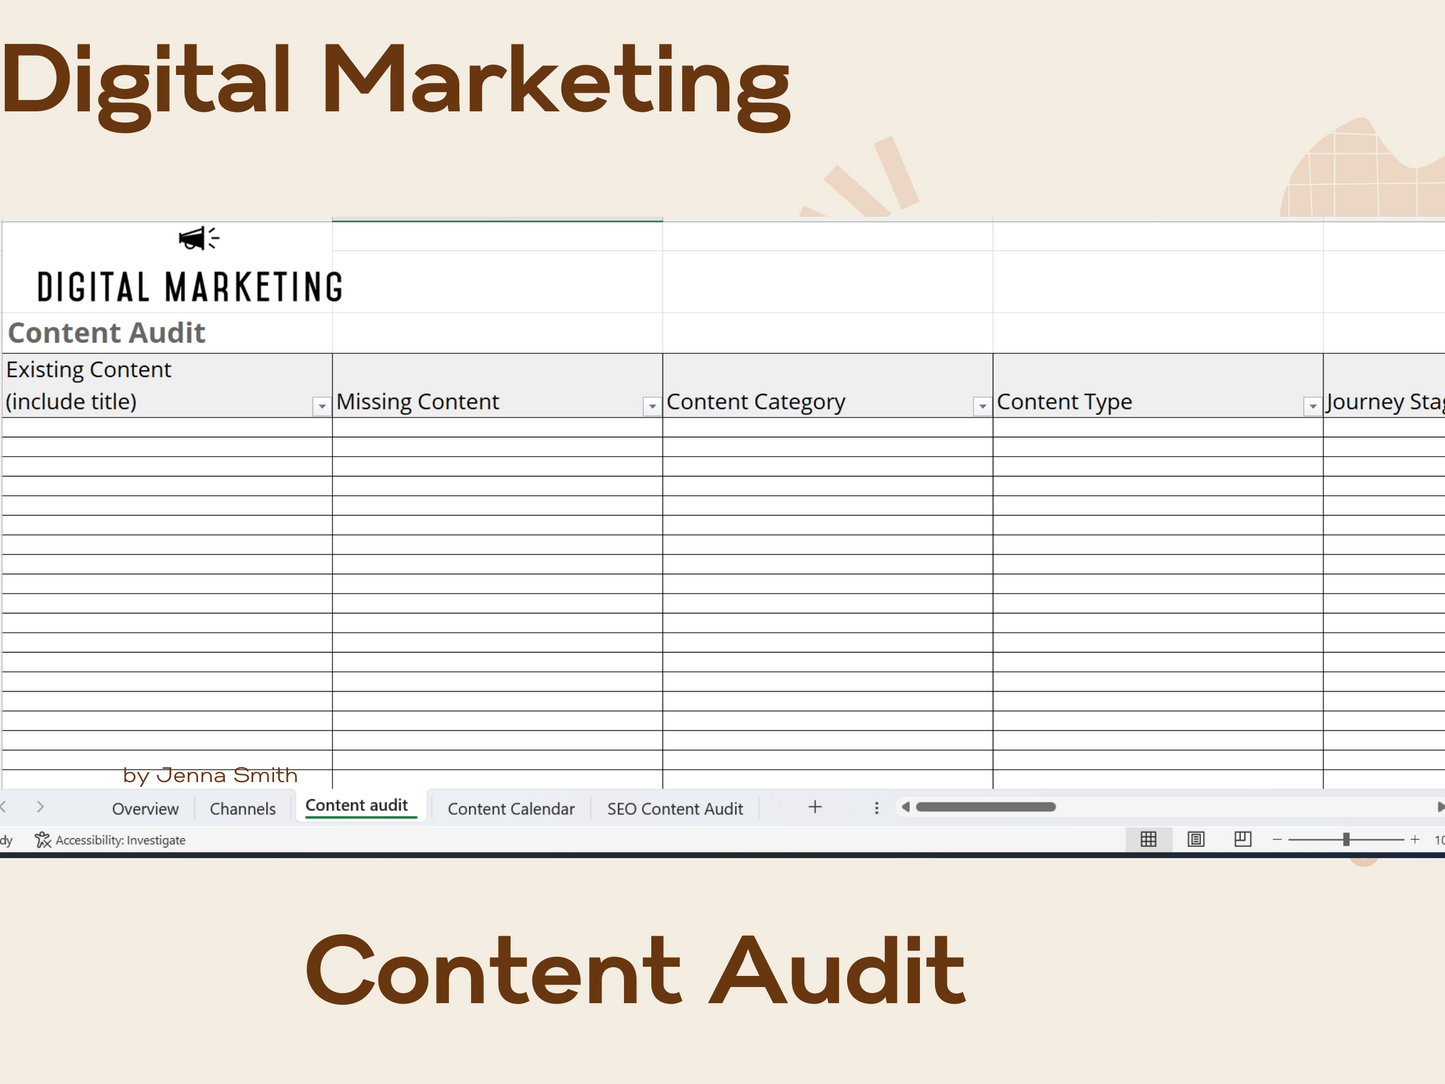 Digital Marketing, Content Planner Calendar & Social Media Posts Bundle Excel Template includes SEO Audit, Content Audit, Marketing Channels